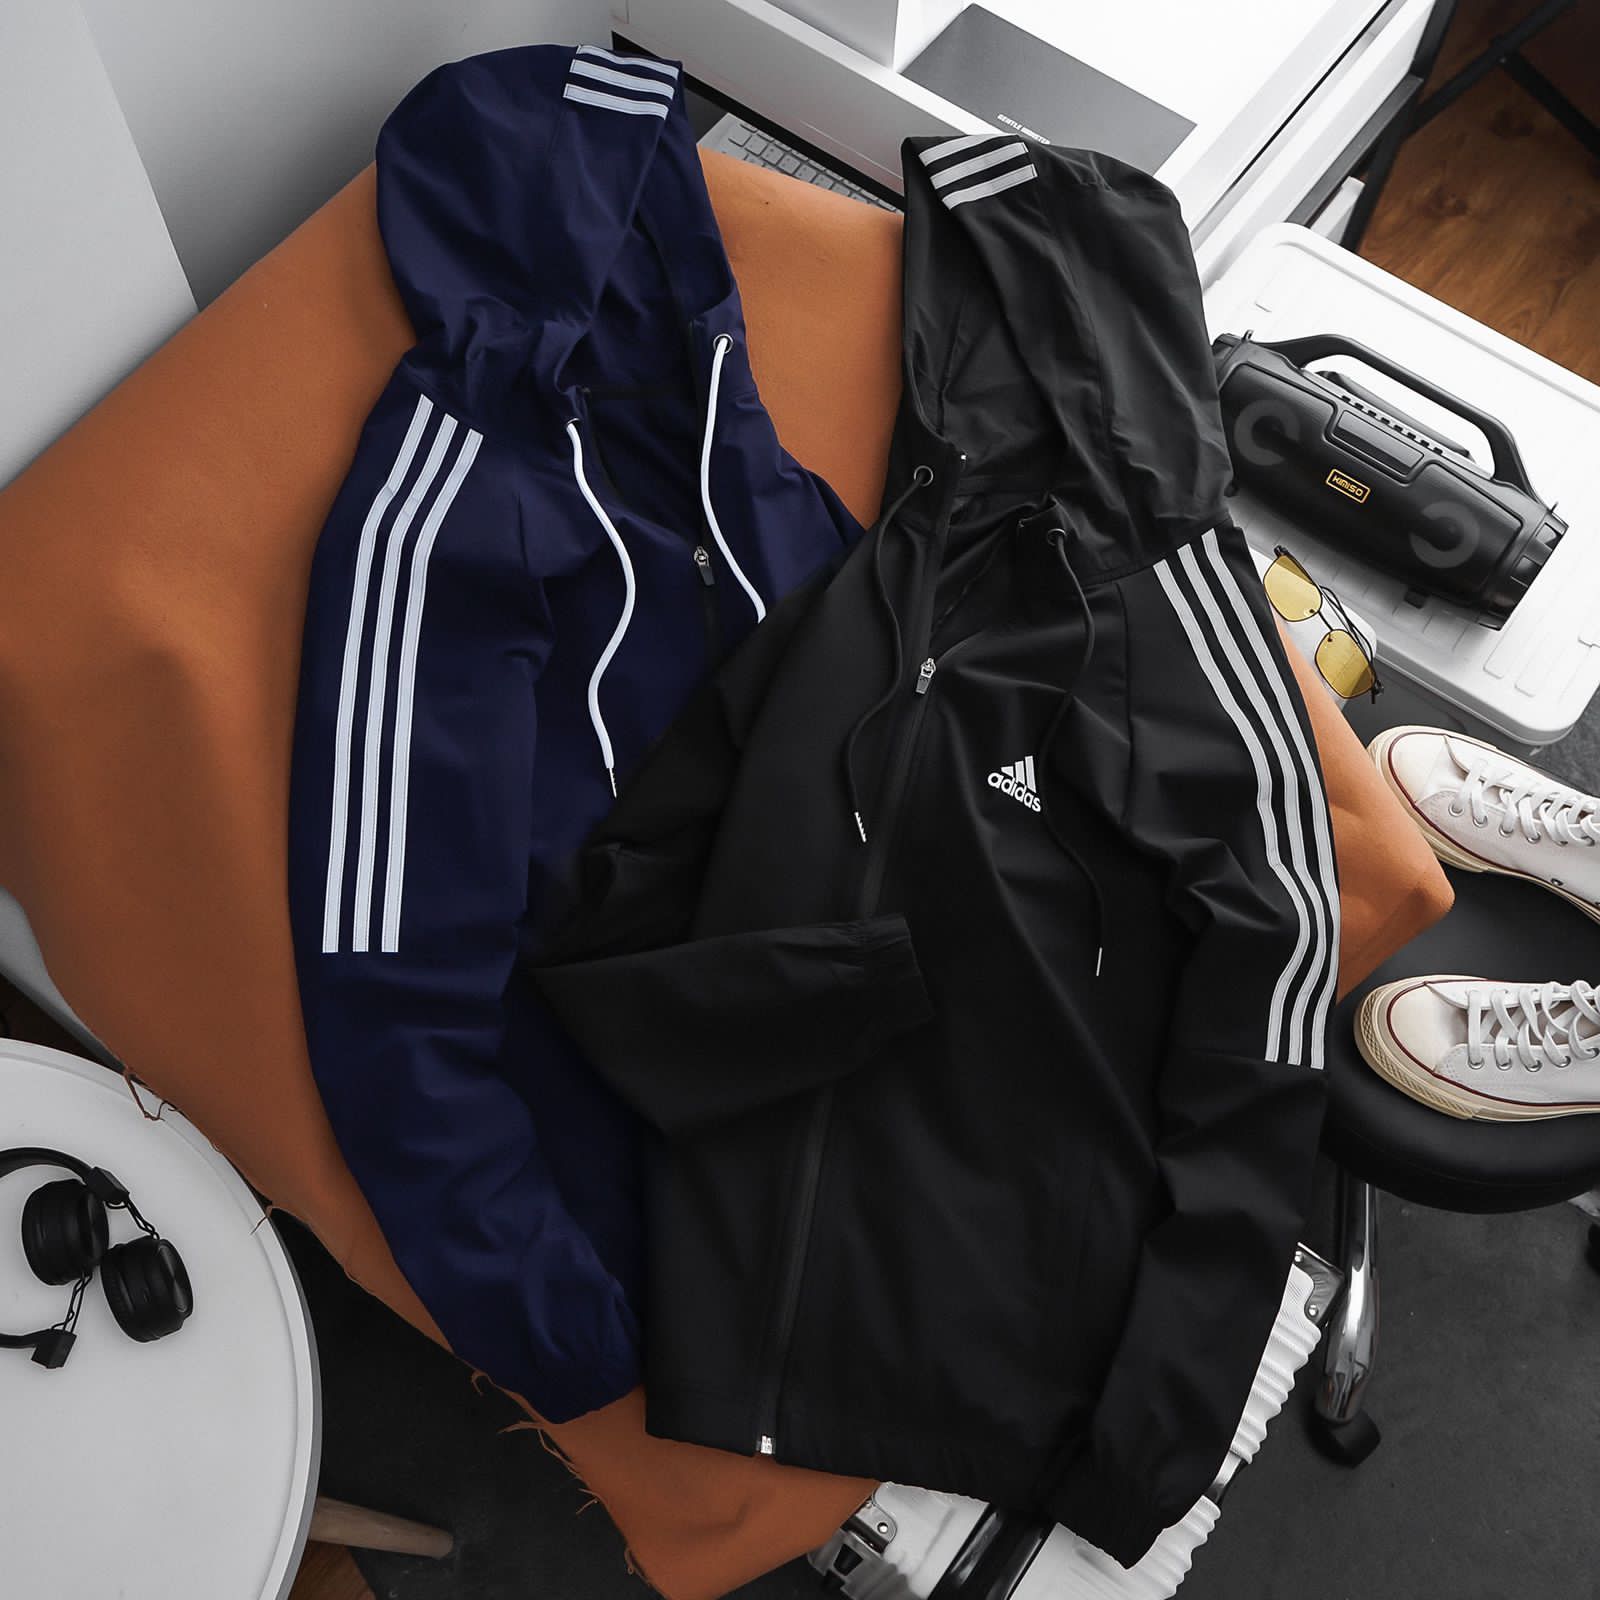 Adidas 1 Layer, jacket